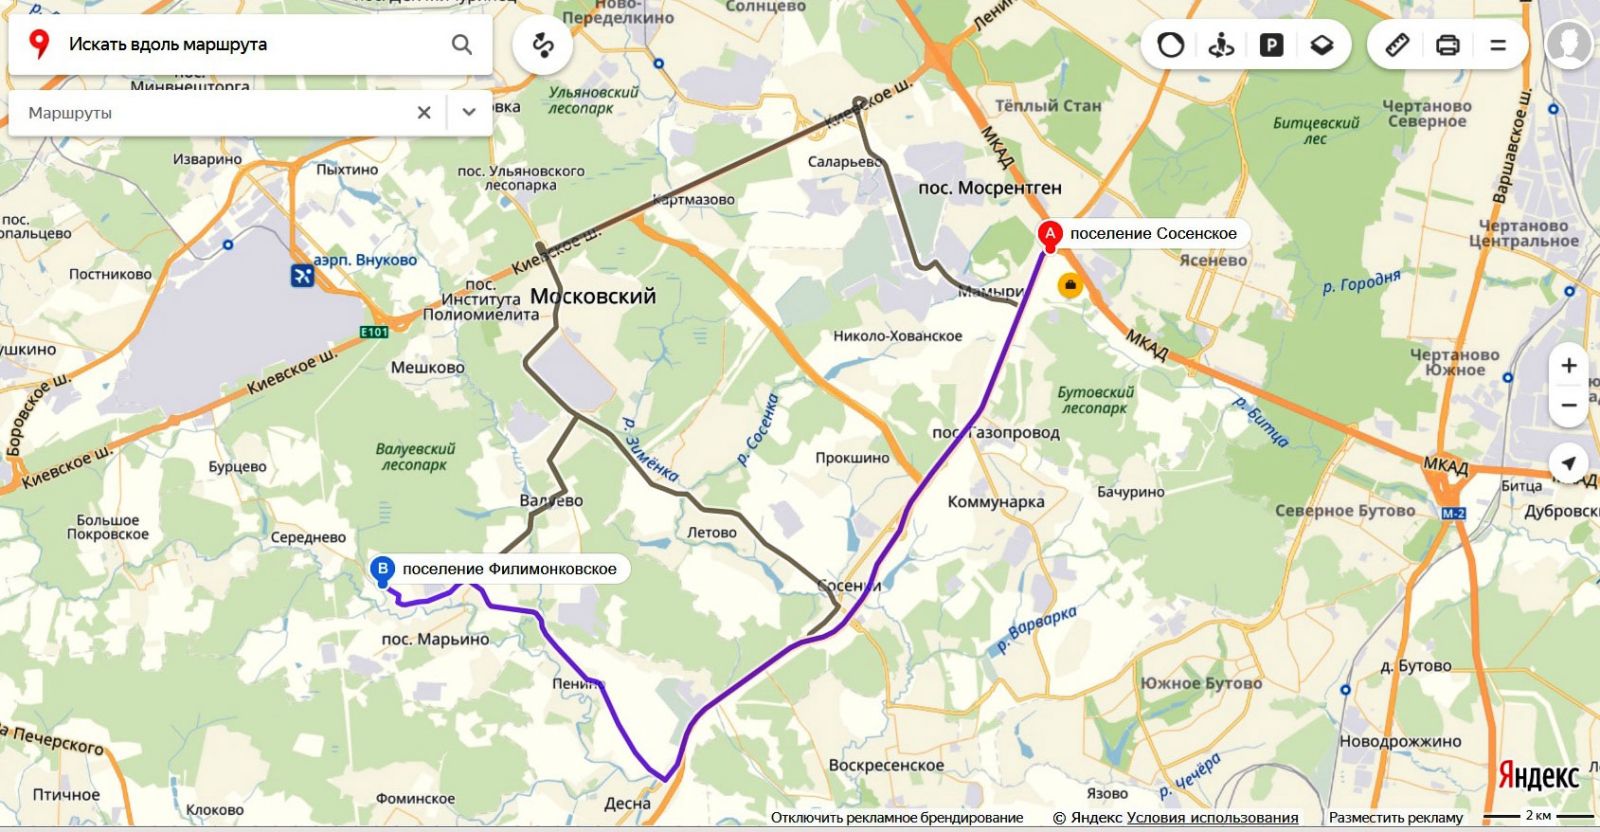 Расстояние теплый стан. Саларьево на карте Москвы. Саларьево автовокзал на карте. Автовокзал Саларьево на карте Москвы. Метро Саларьево на машине маршрут.